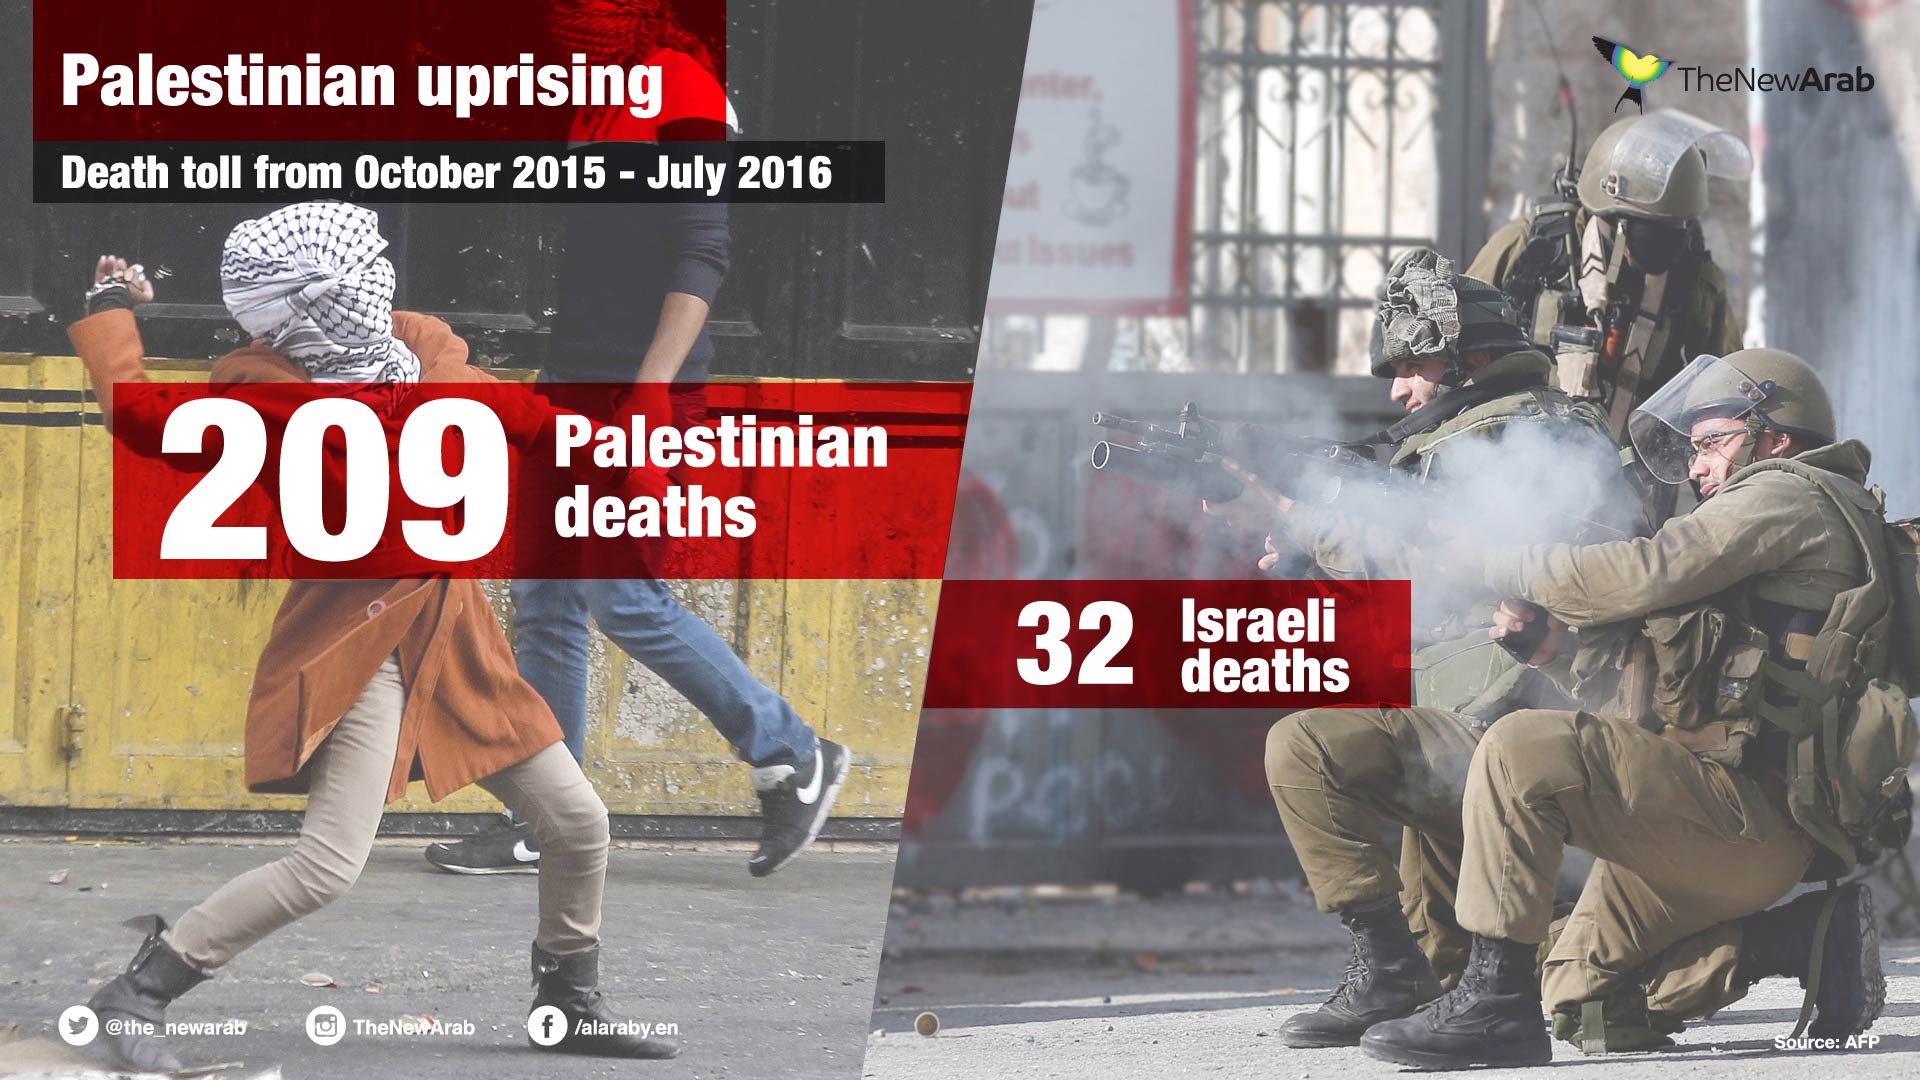 palestinian_uprising-03 lower res.jpg